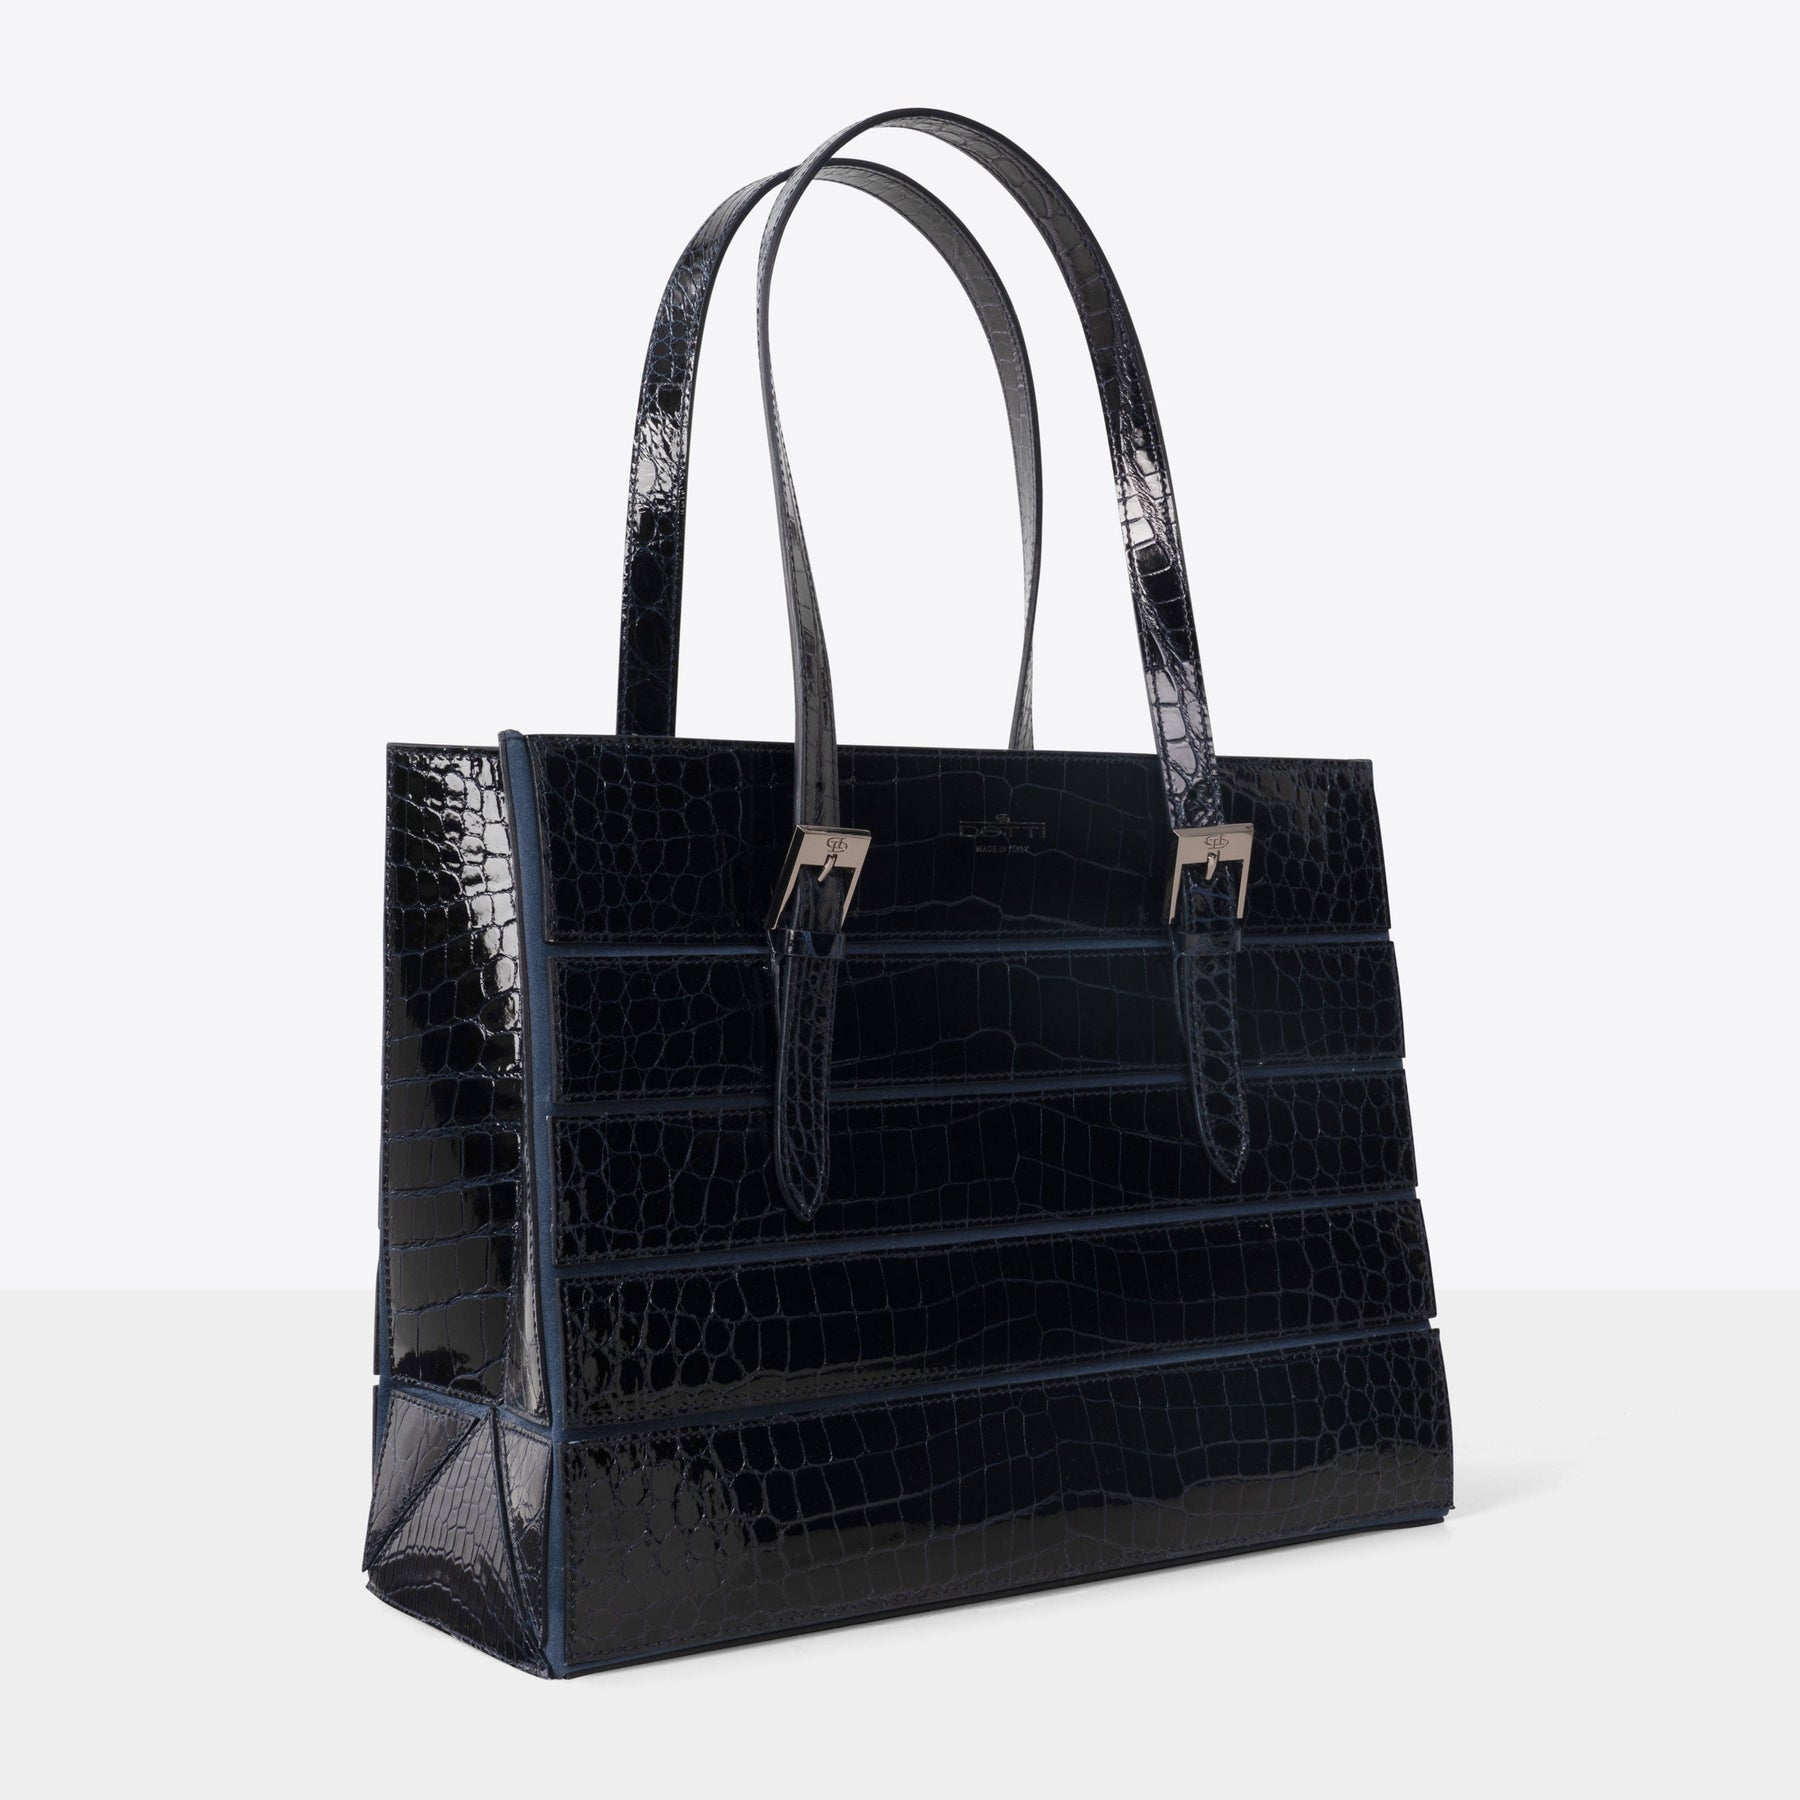 DOTTI FLORA in Blue Crocodile, Luxury Handbags. Made in Italy